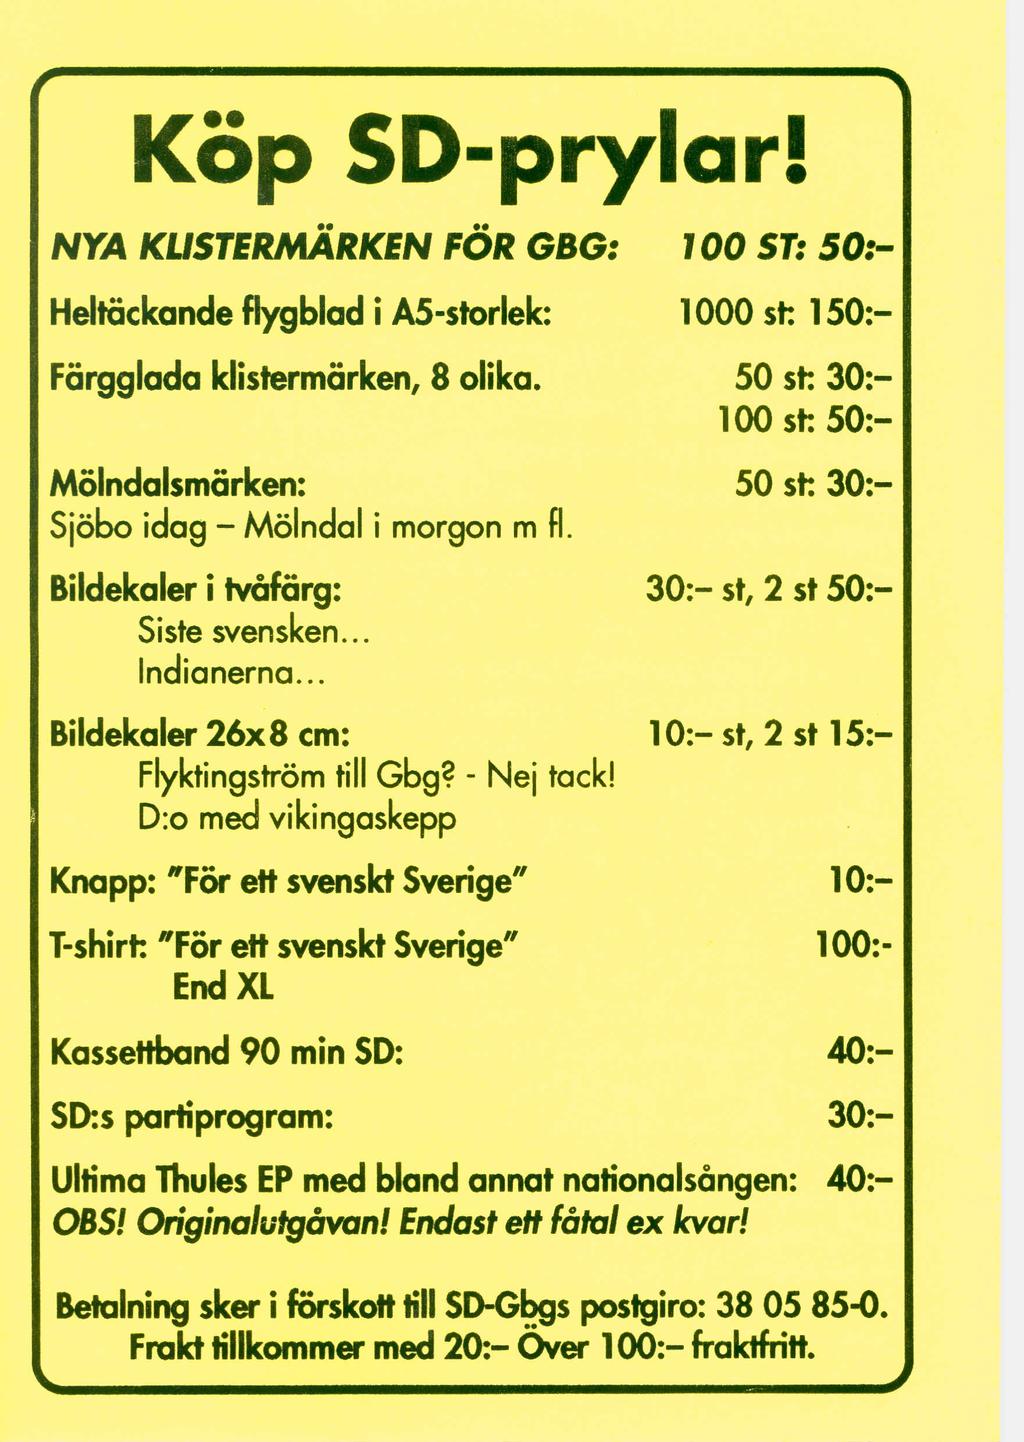 Kop SD-prylar! NYA KLISTERMARKEN FOR G8G: HeltOekande flygblad i AS-storlek: Fargglada klistermarken, 8 olika. Molndalsmarken: Siebo idag - Melndal i morgon m fl. Bildekaler i tvafarg: Siste svensken.